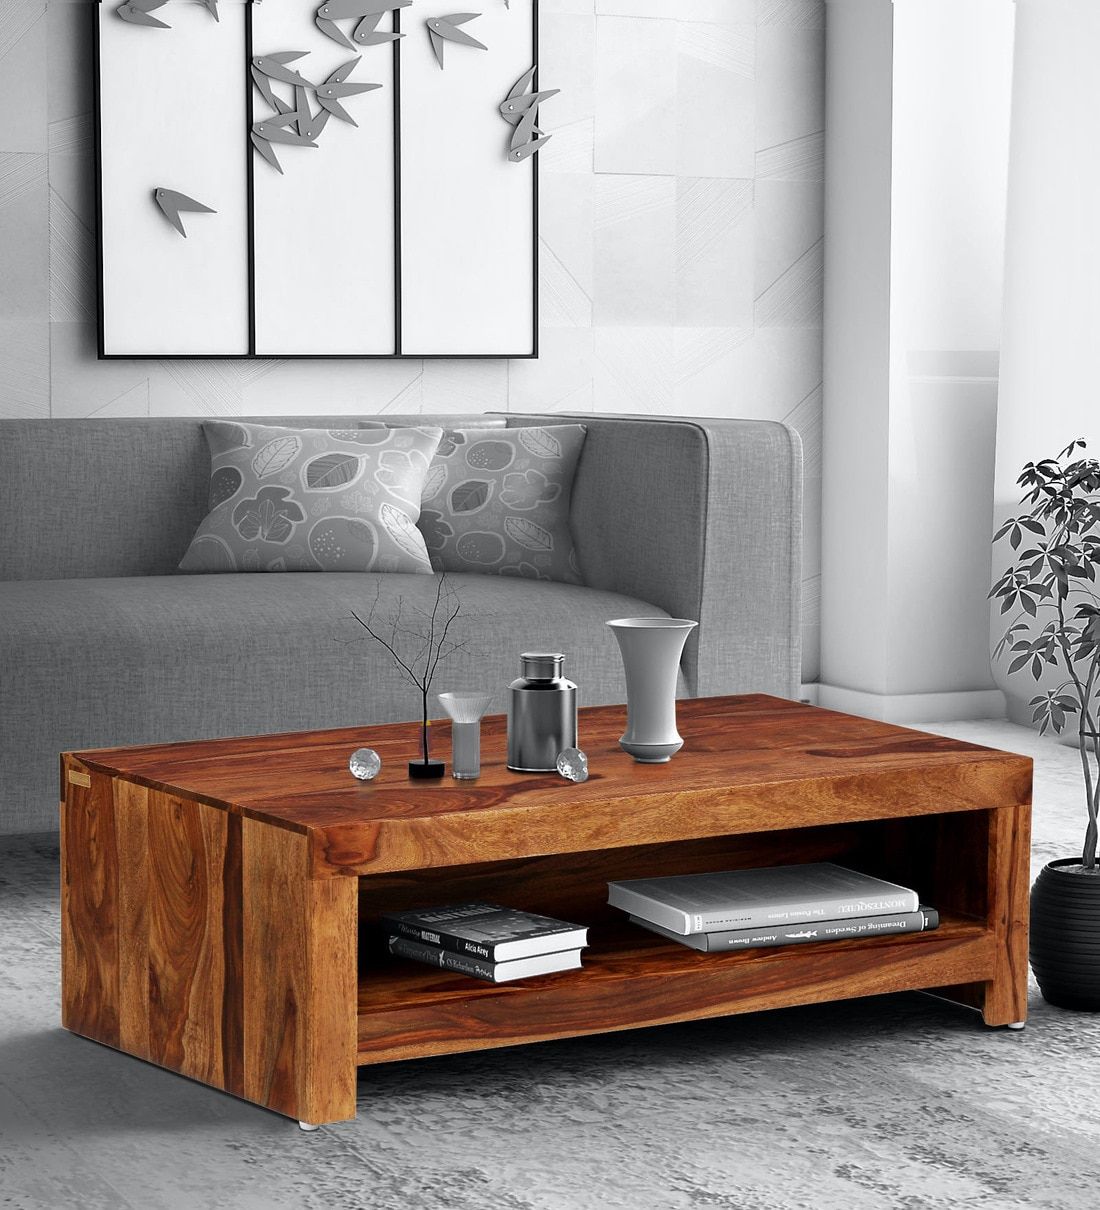 Buy Acropolis Solid Wood Coffee Table In Rustic Teak Finish Regarding Modern Wooden X Design Coffee Tables (Gallery 6 of 20)